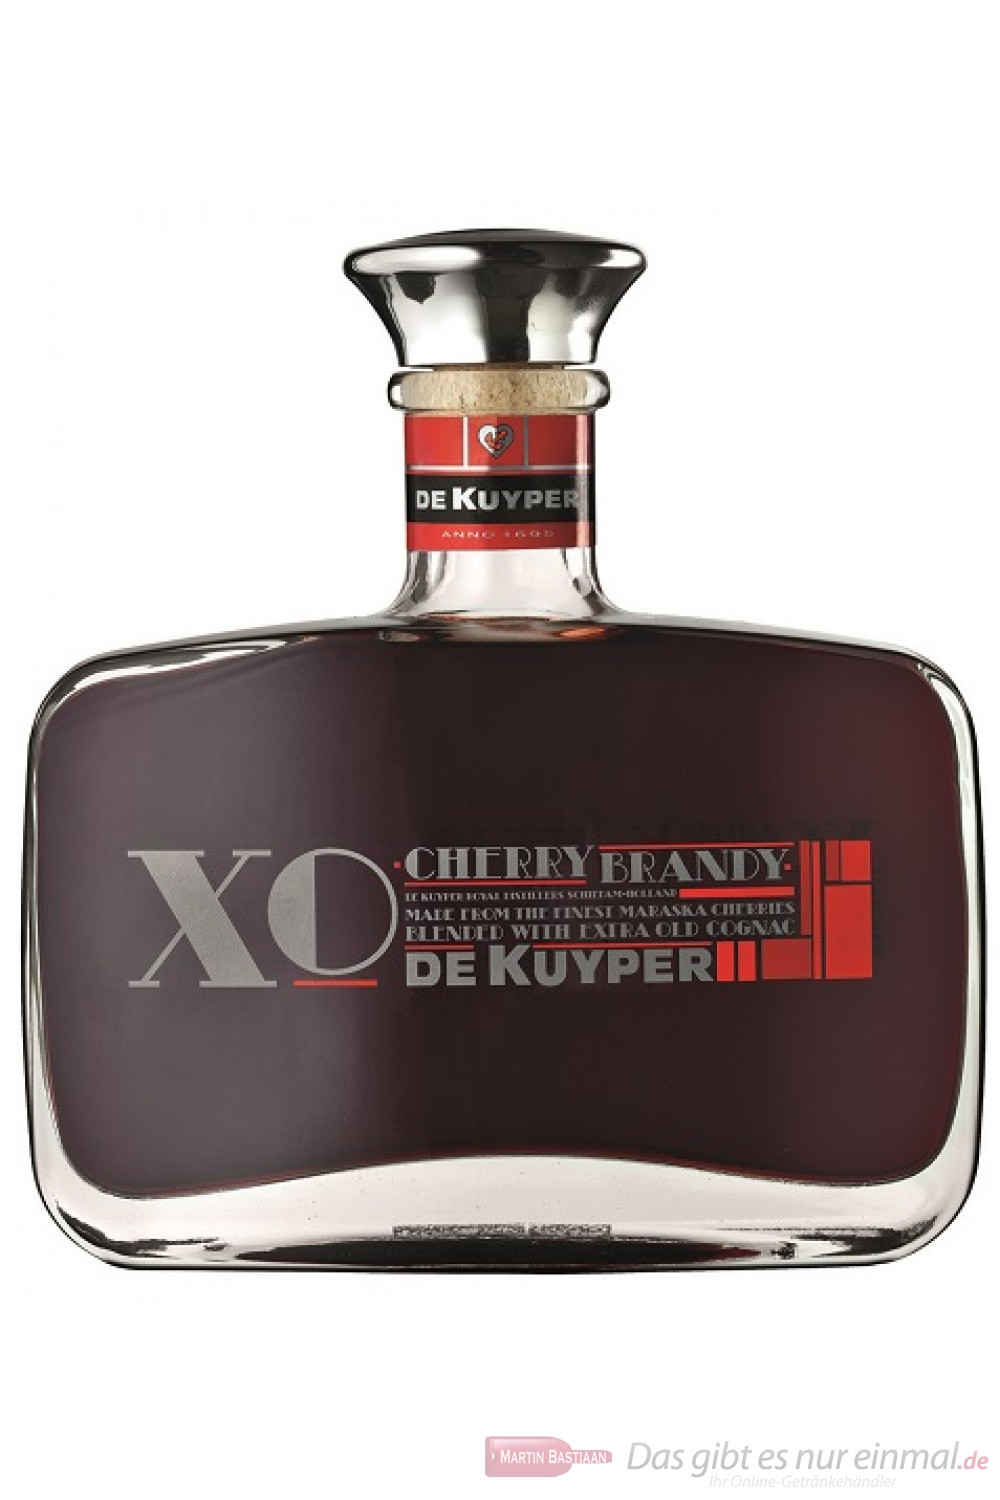 De Kuyper Cherry Brandy XO